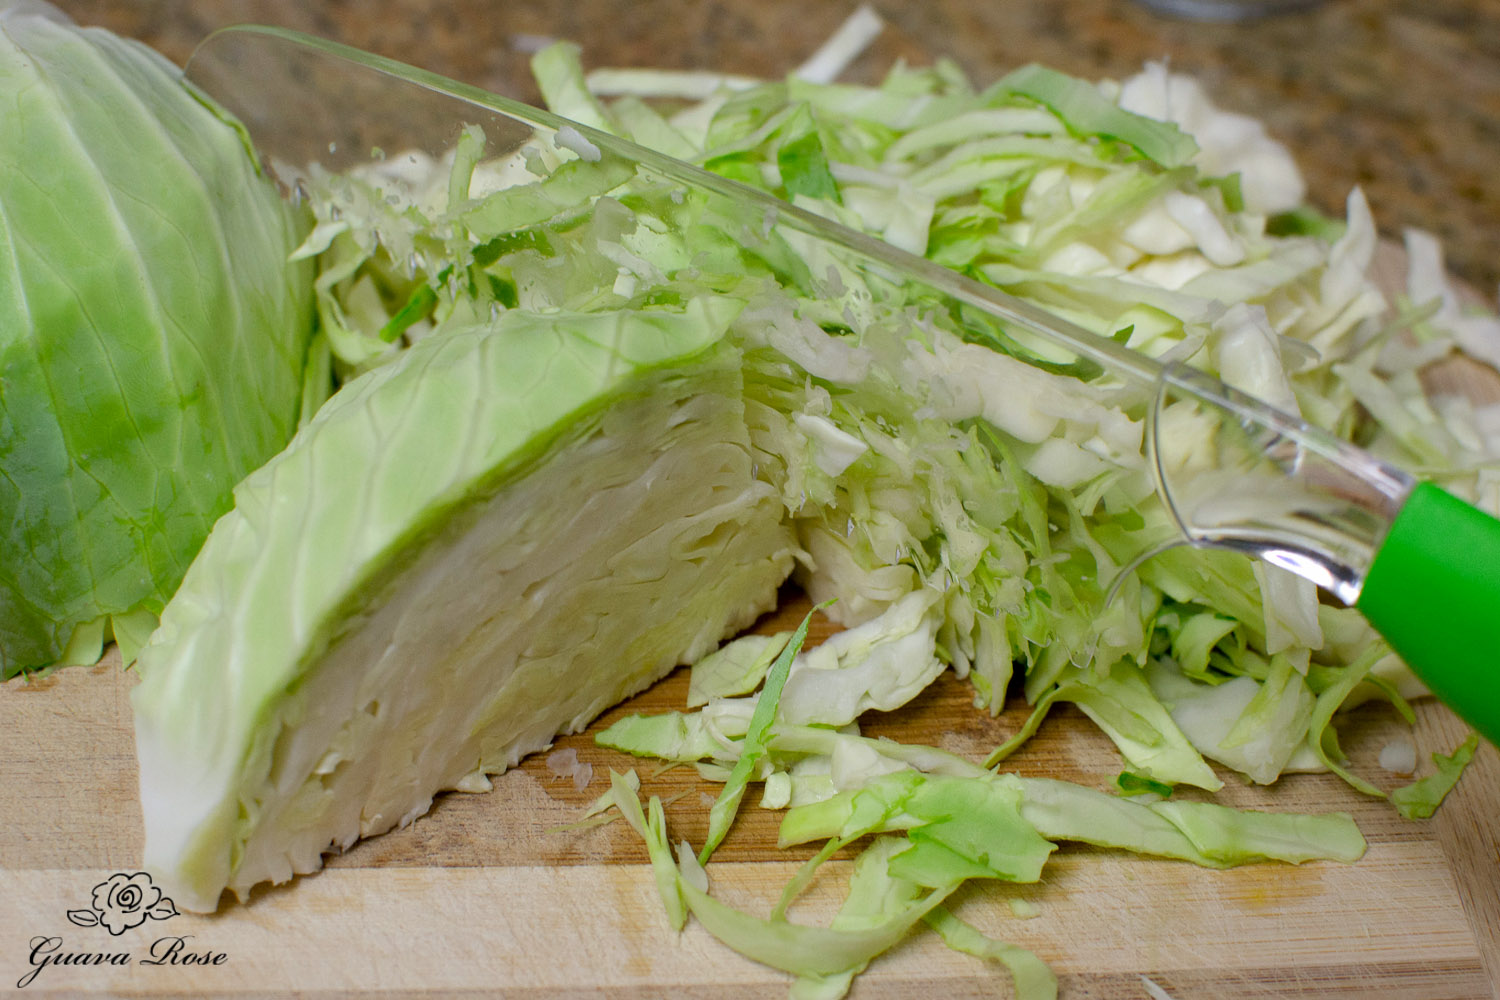 Cutting cabbage